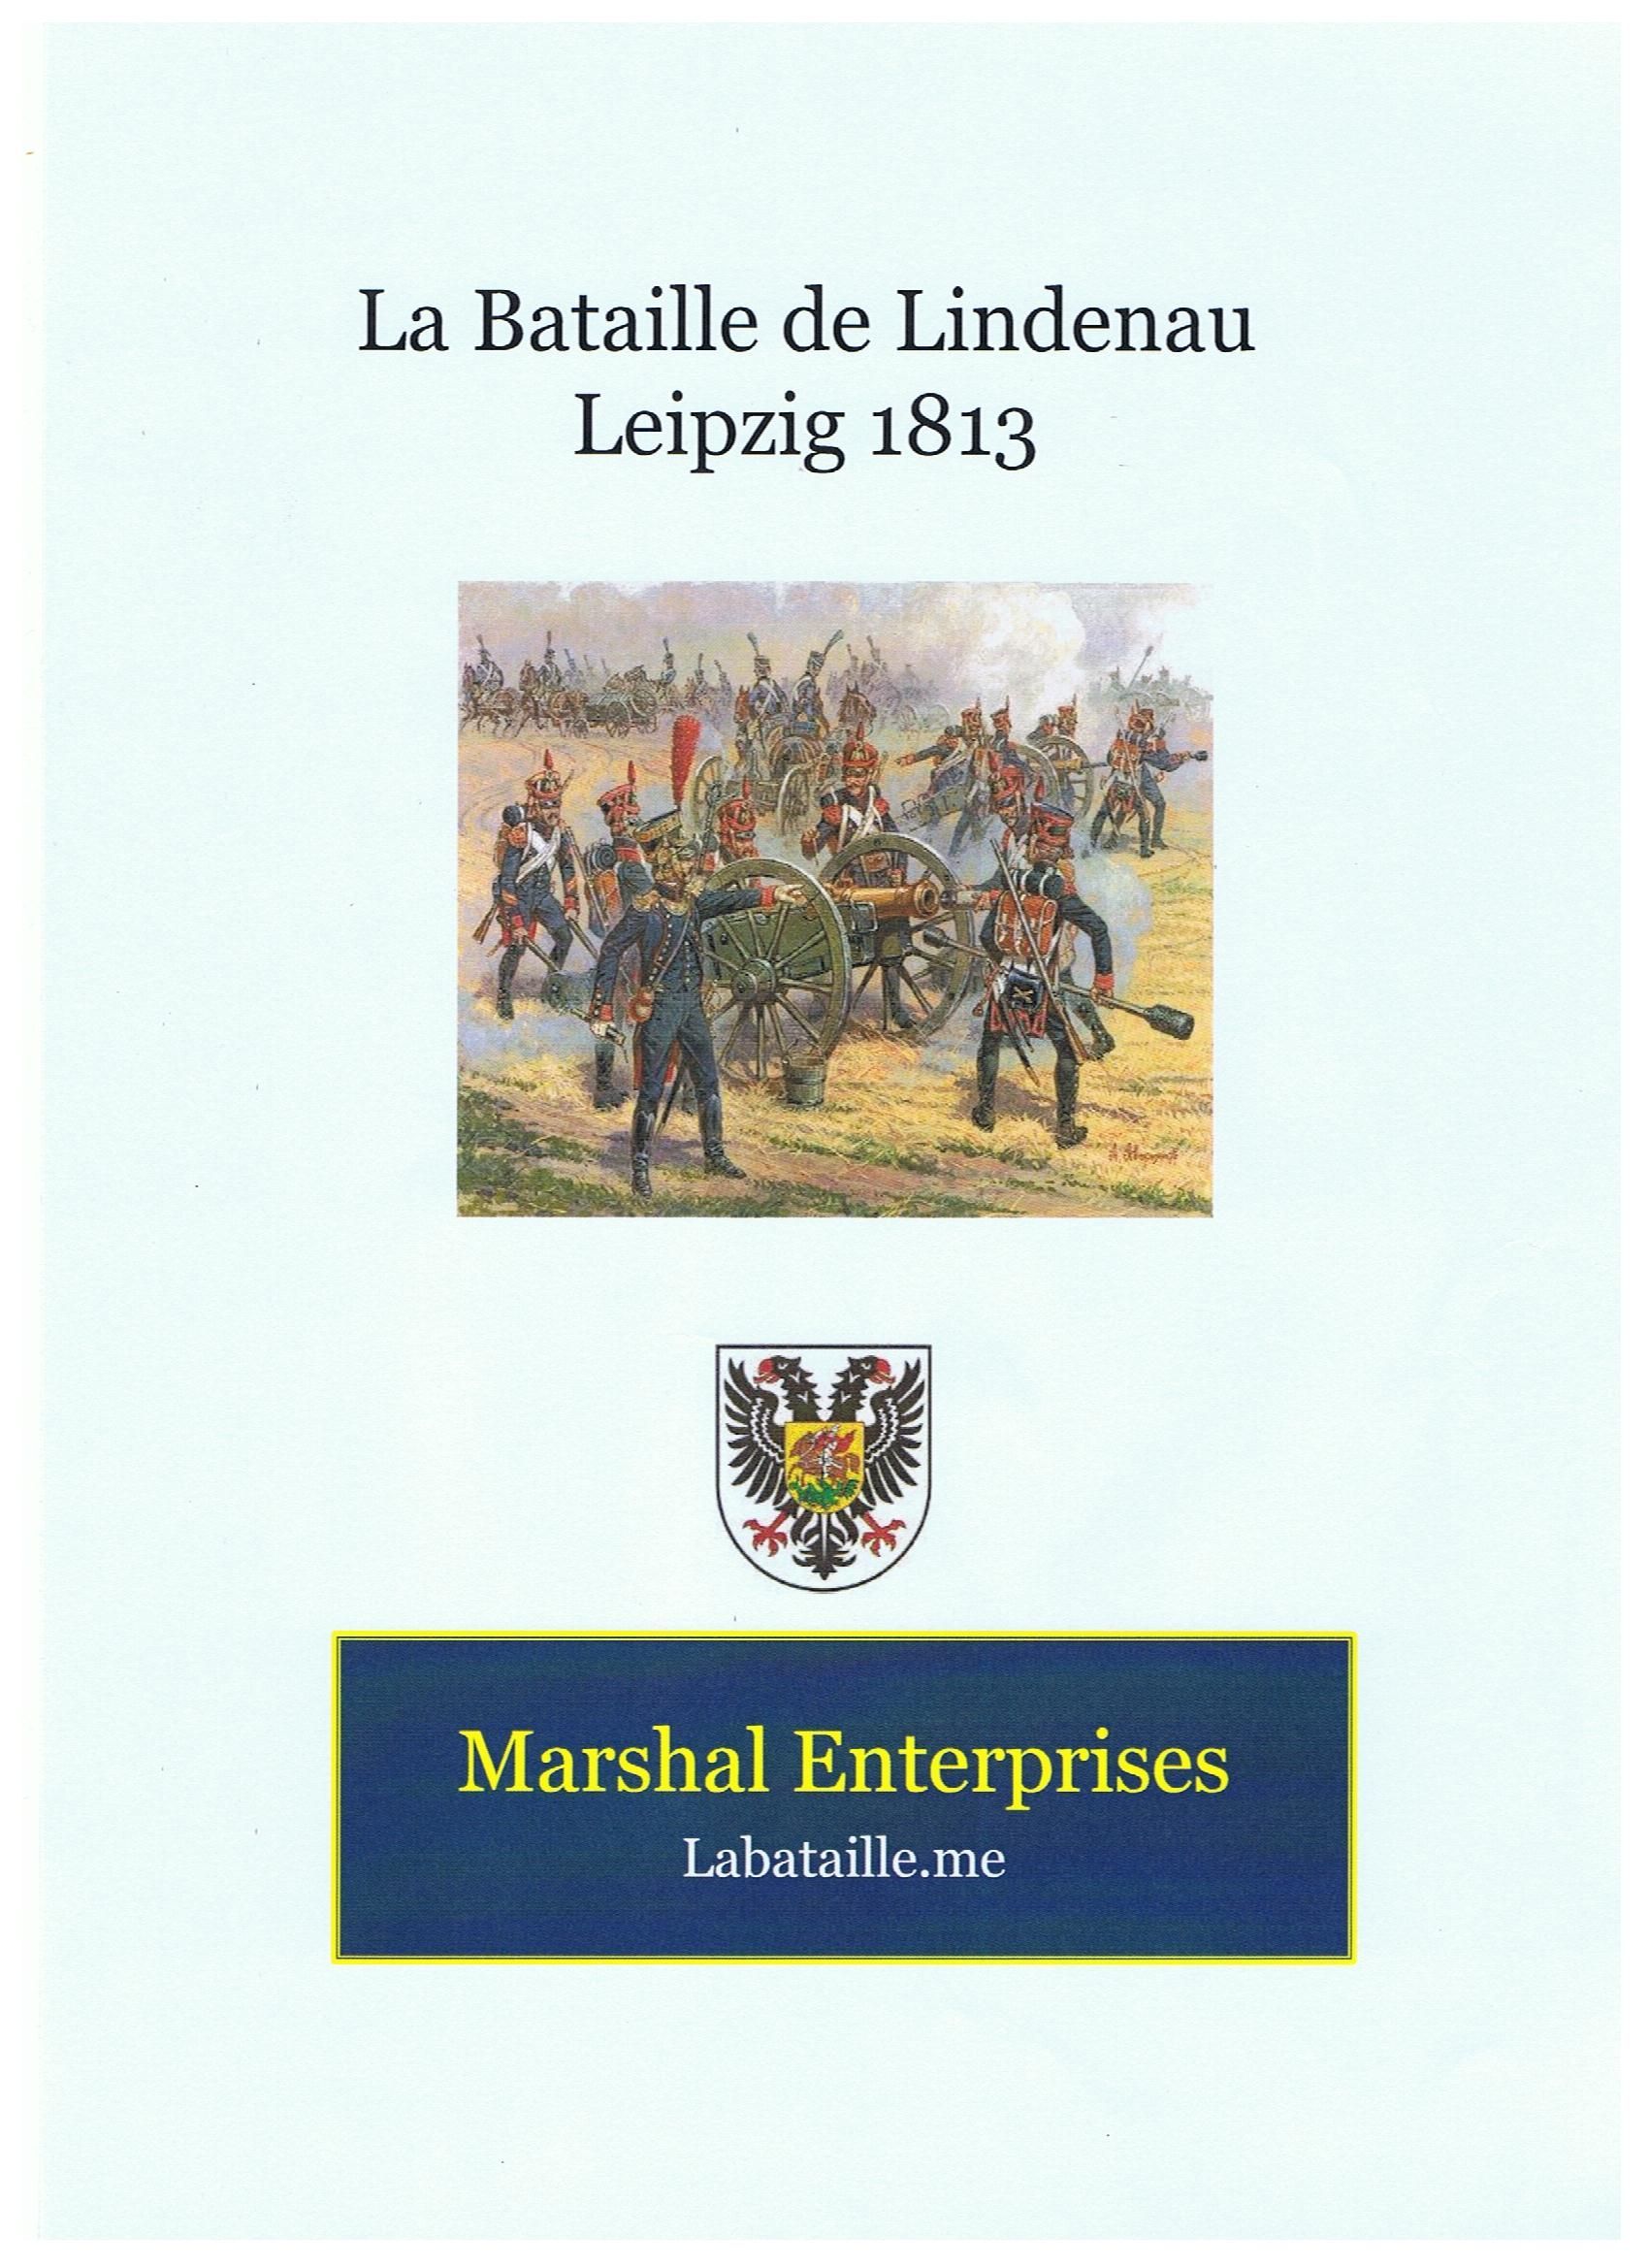 La Bataille de Lindenau 1813